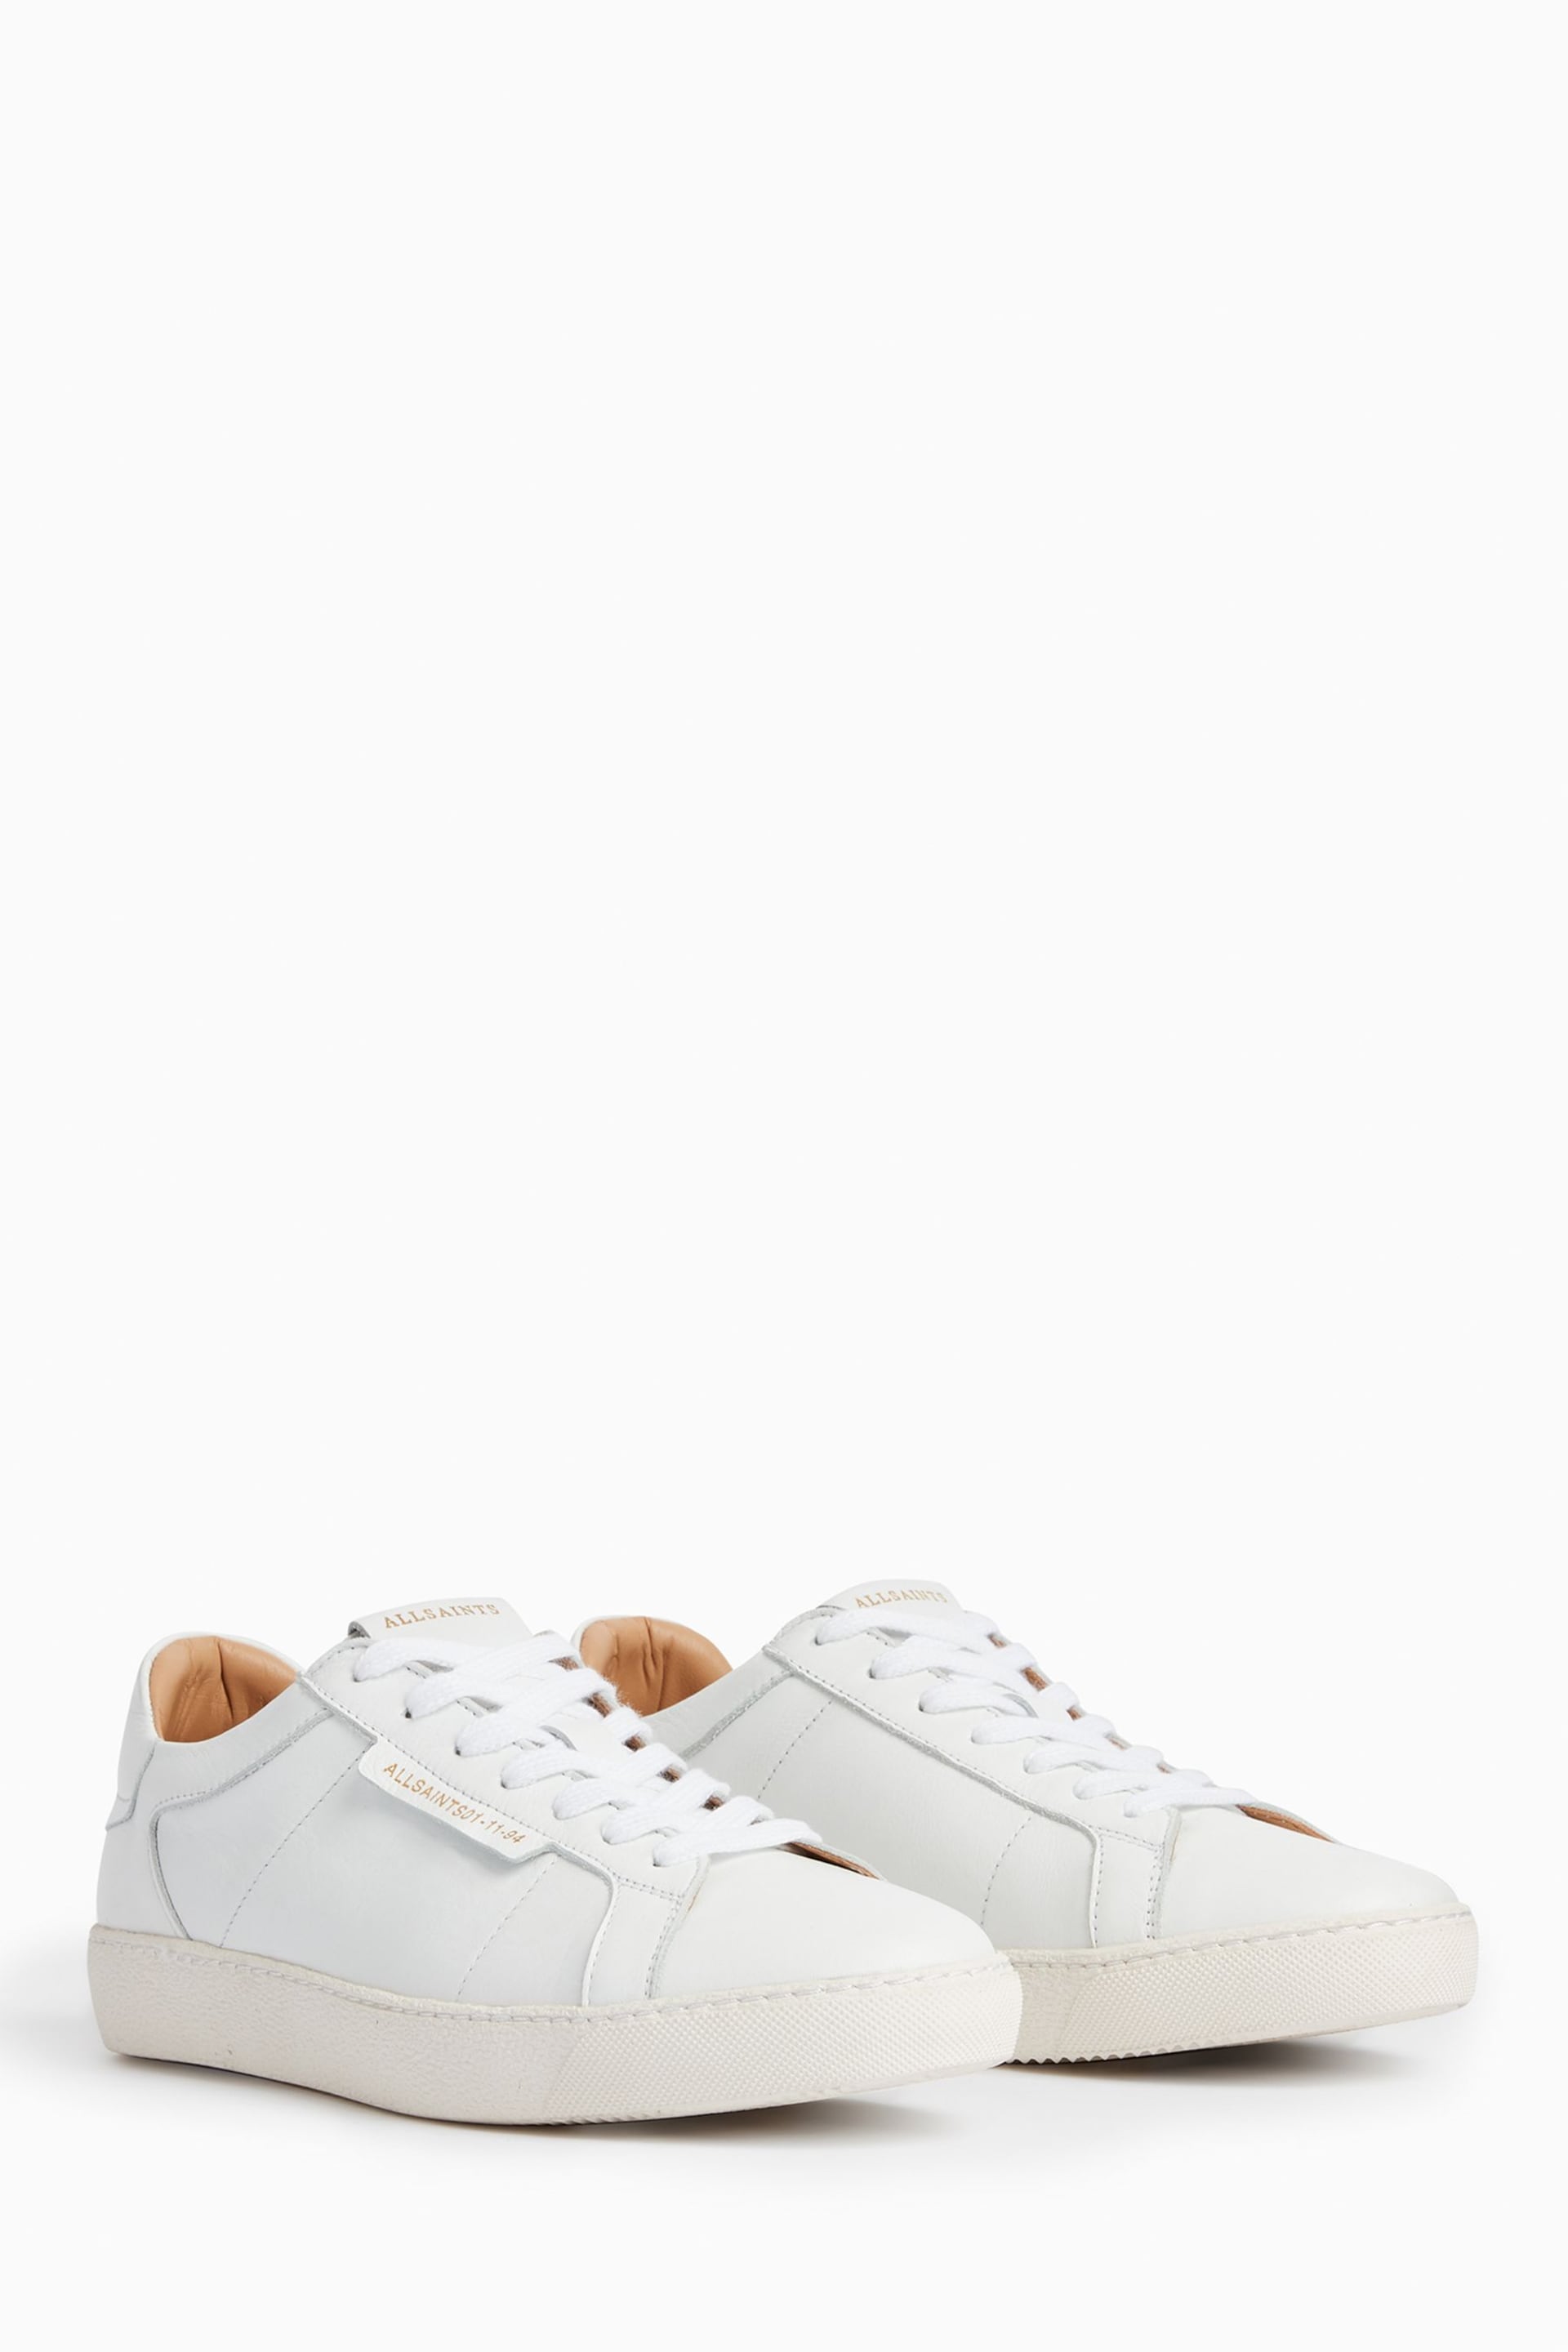 AllSaints White Sheer Sneakers - Image 2 of 7